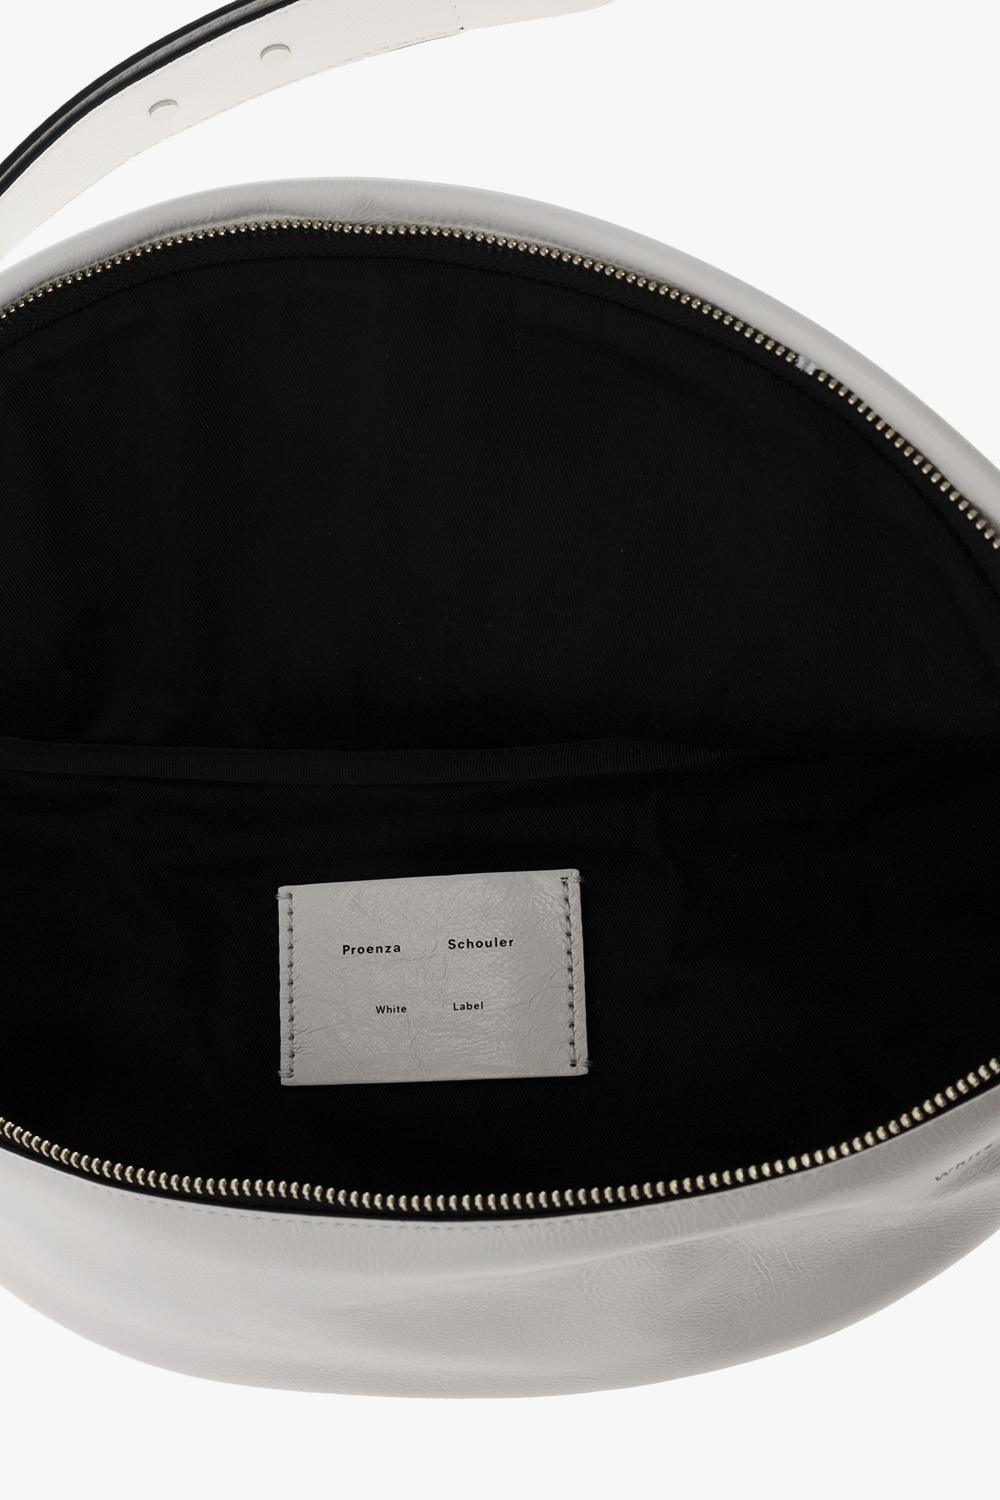 proenza 90mm Schouler White Label Gerippter Midirock Blau ‘Stanton’ belt bag